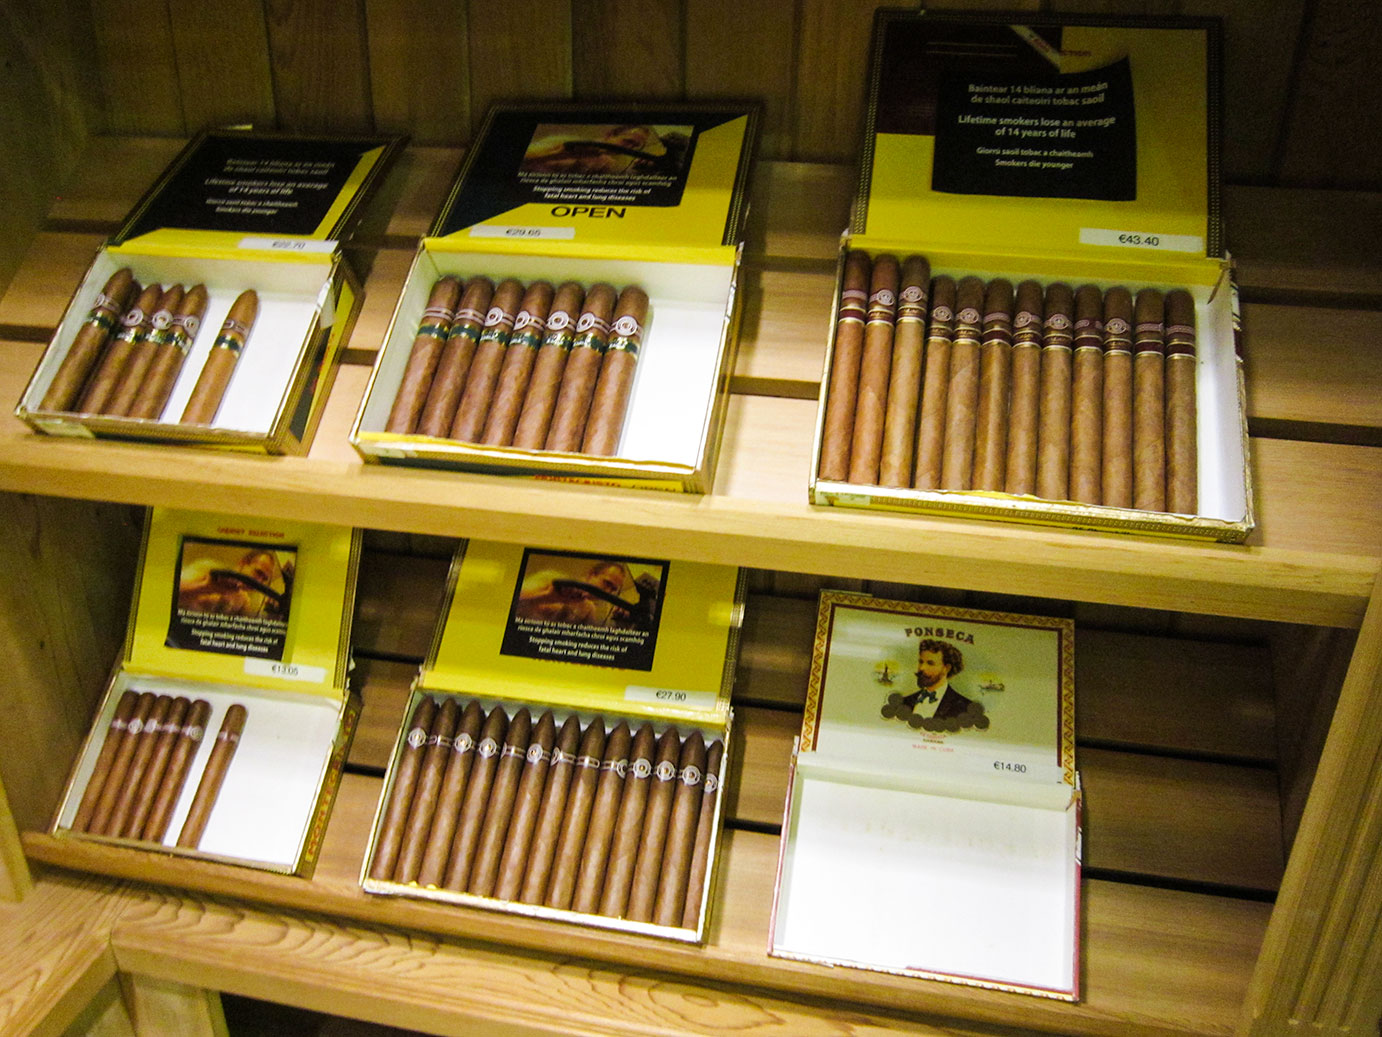 Cuban cigars in Peterson's humidor. Photograph, Glenn .Kaufman